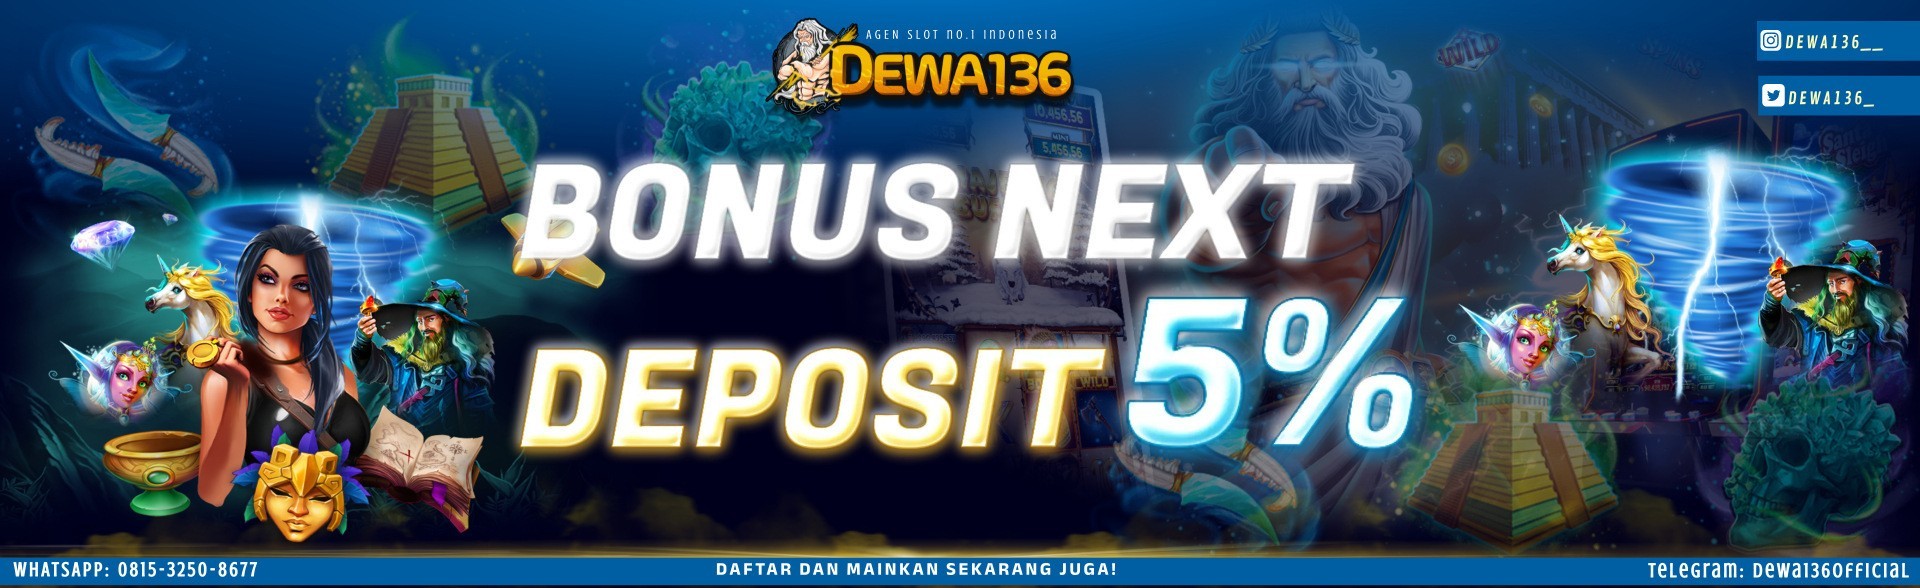 Bonus Next Deposit 5%